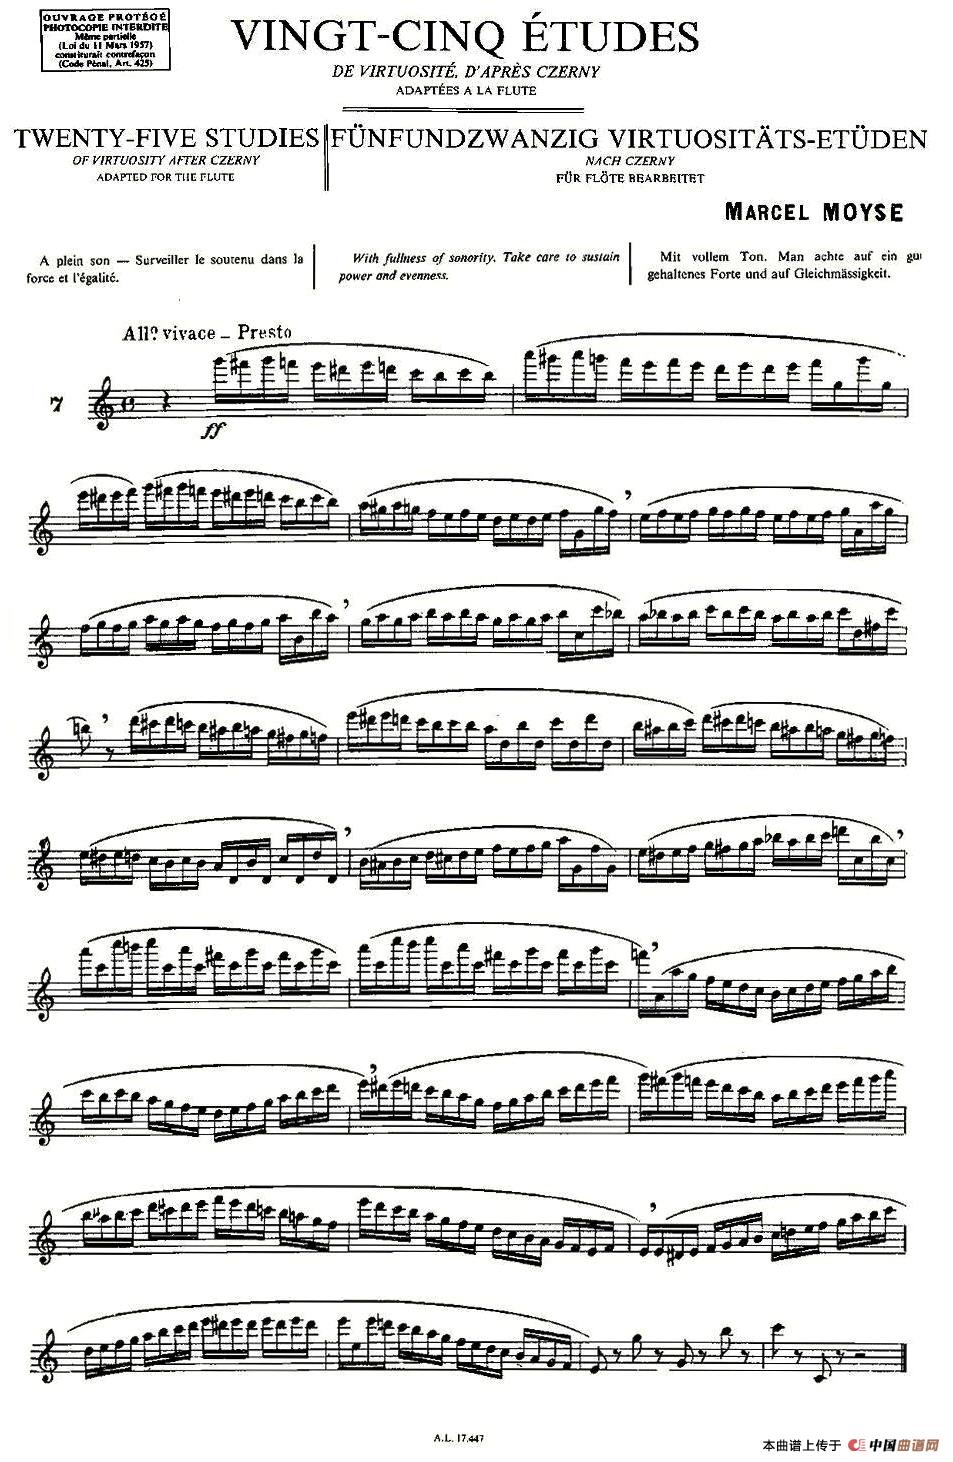 Moyse - 25 Studies after Czerny flute  [7]（25首改编自车尔